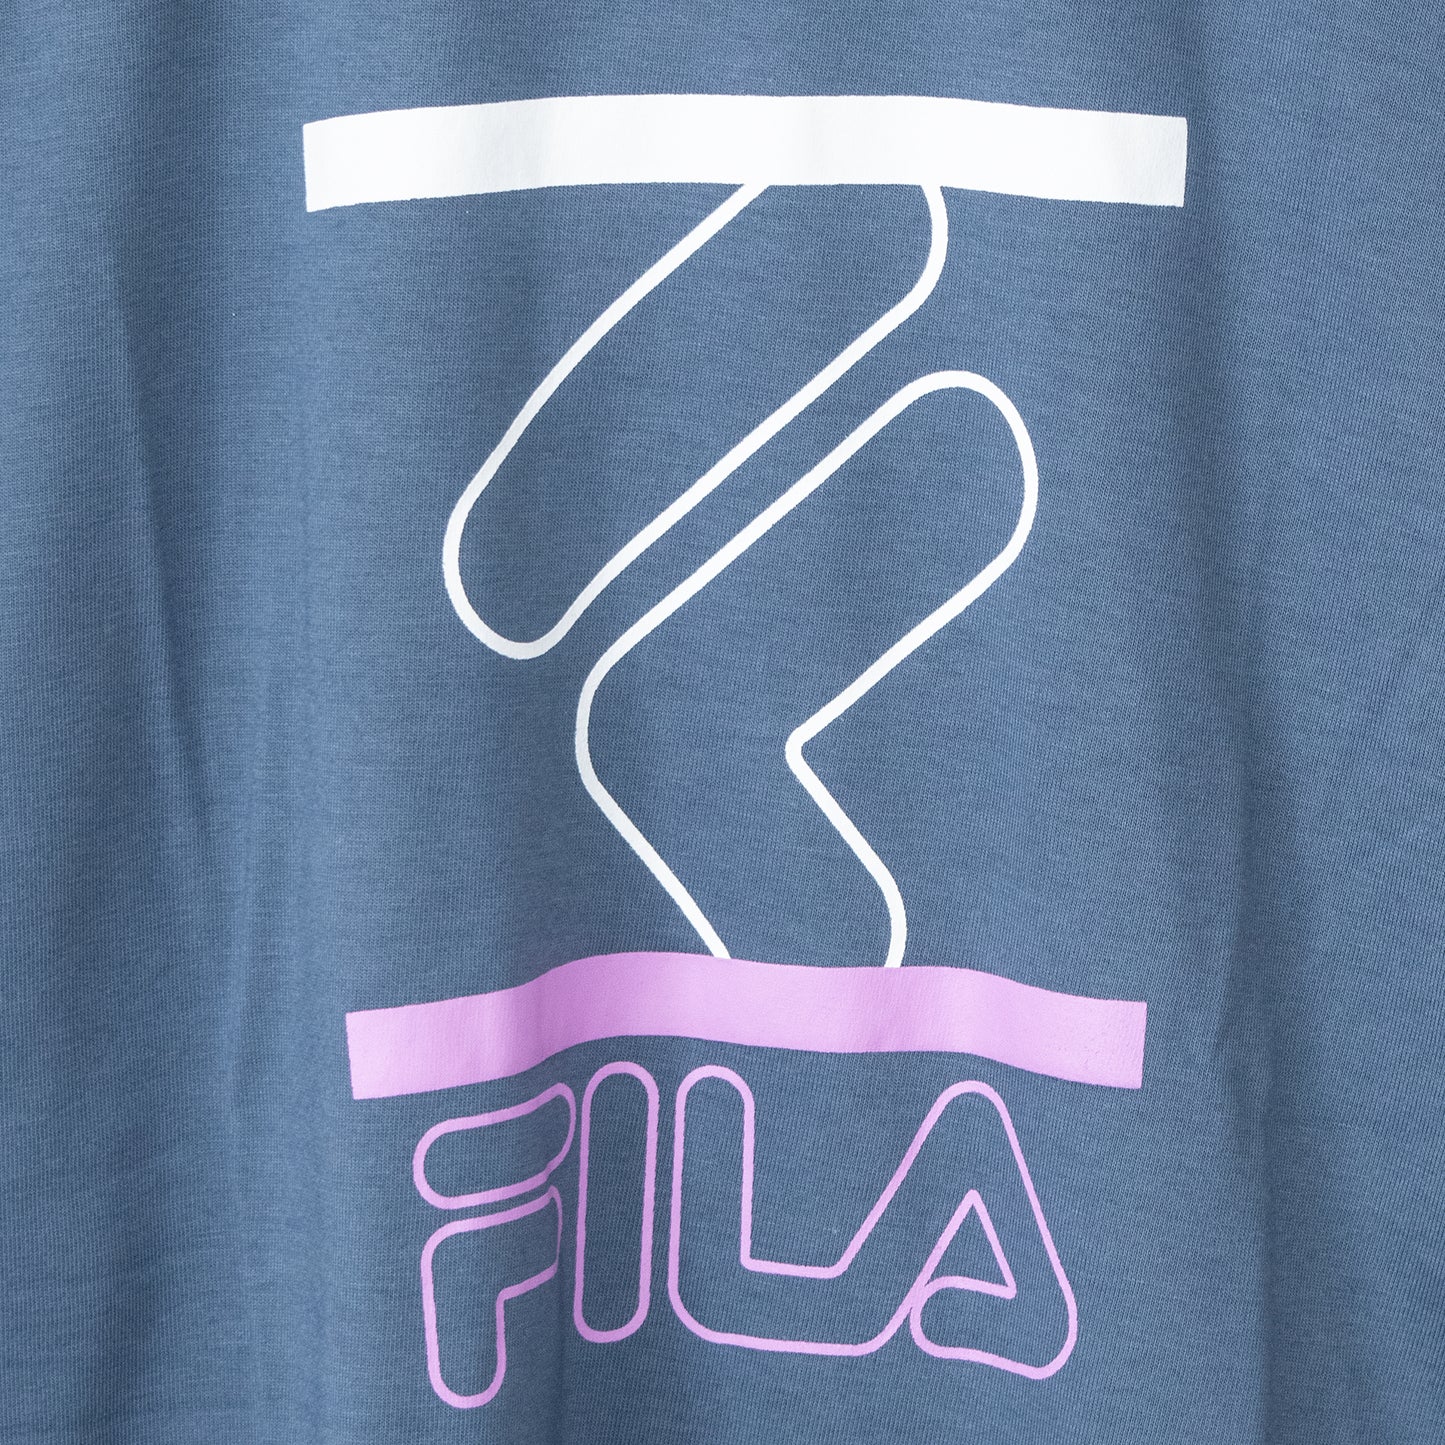 FILA ロゴグラフィック 半袖Tシャツ BLUE